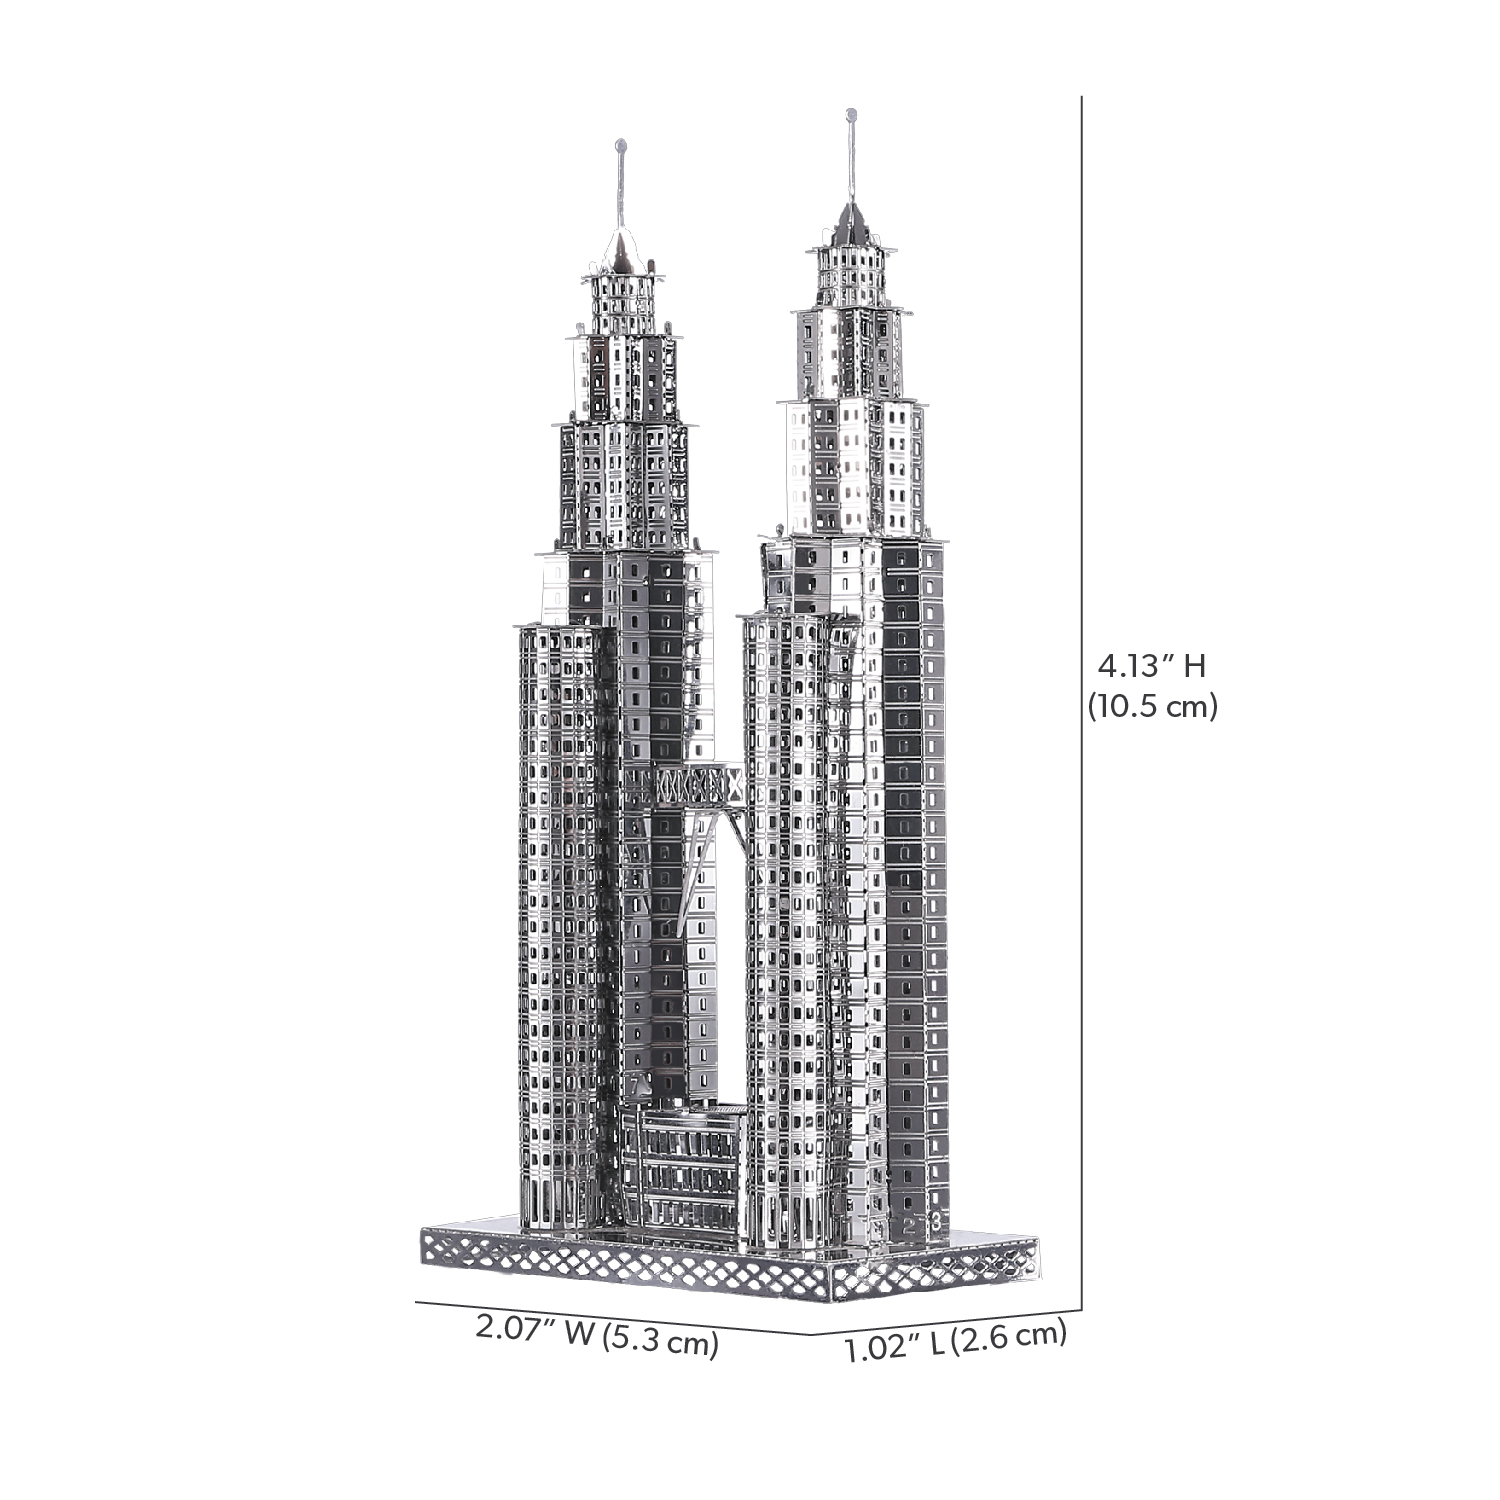 petronas twin towers sketch